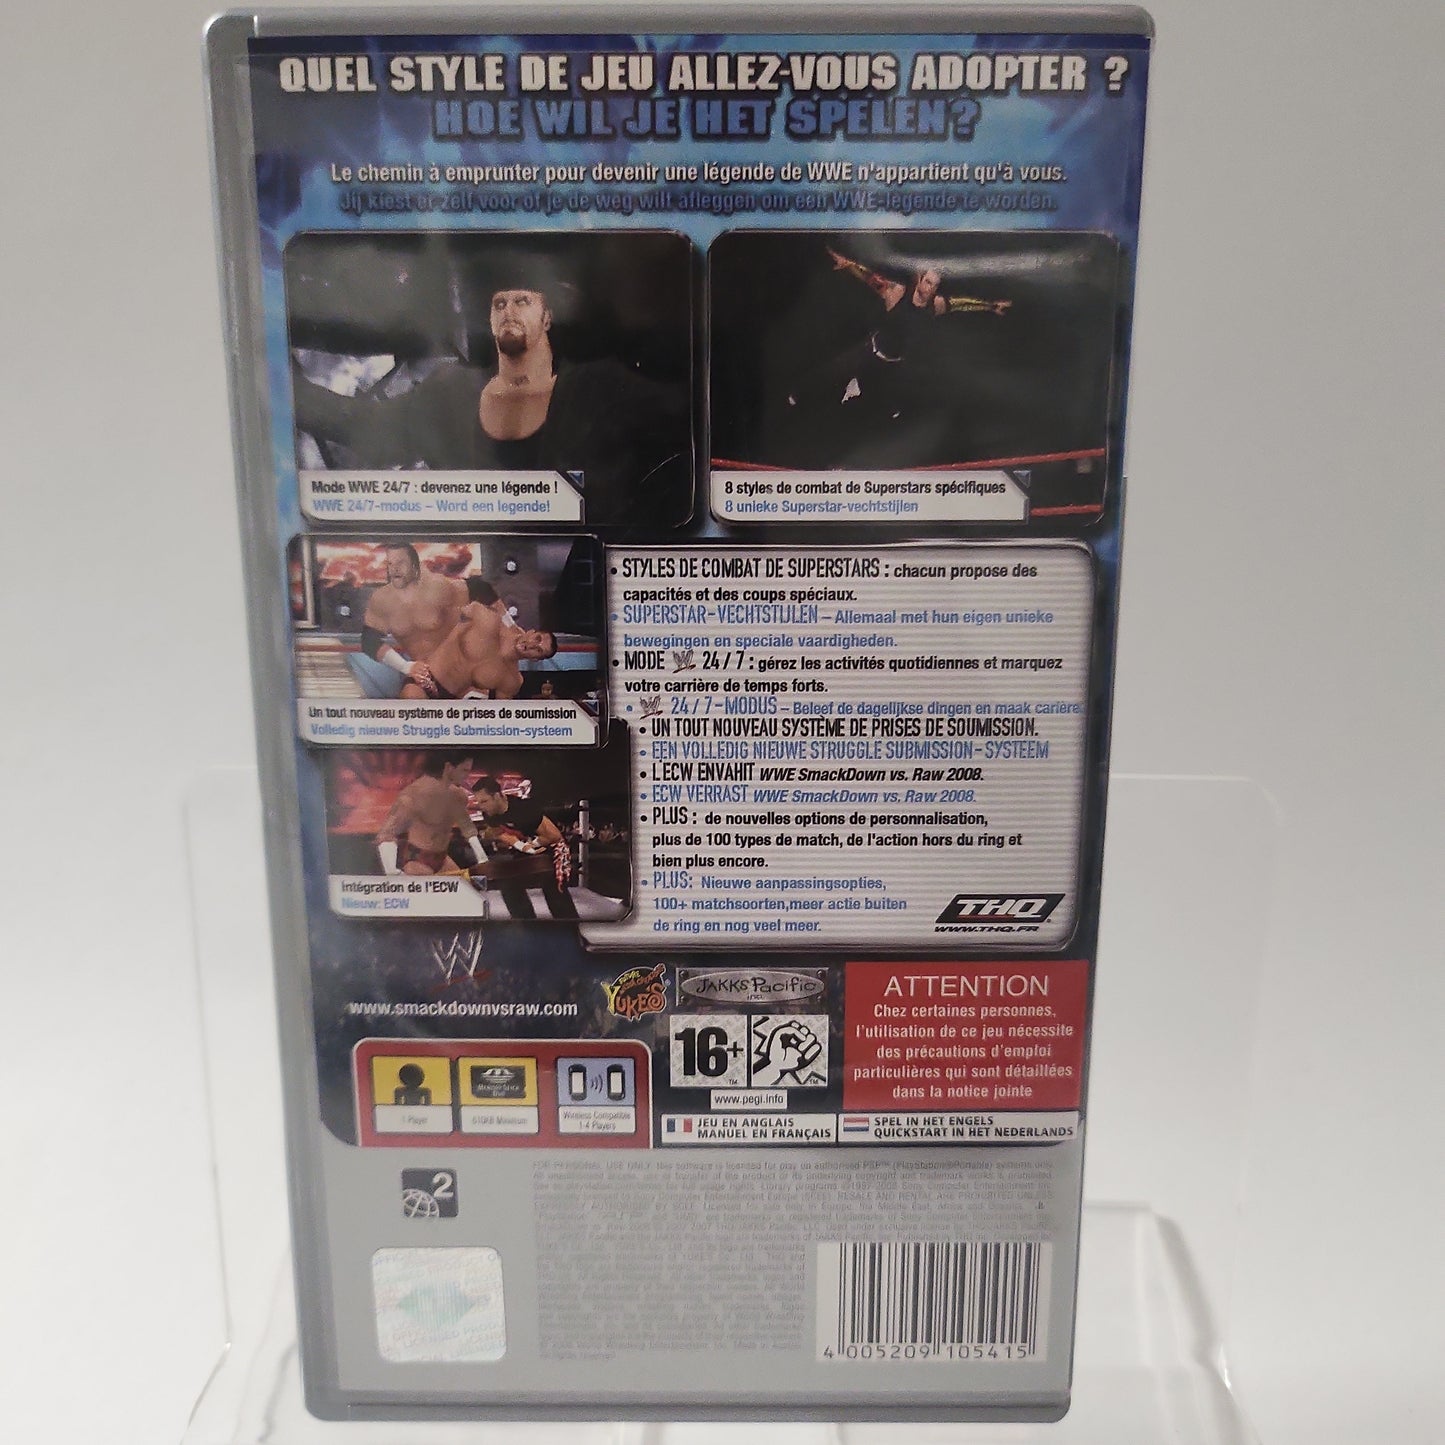 Smackdown vs Raw 2008 Featuring ECW Platinum PSP